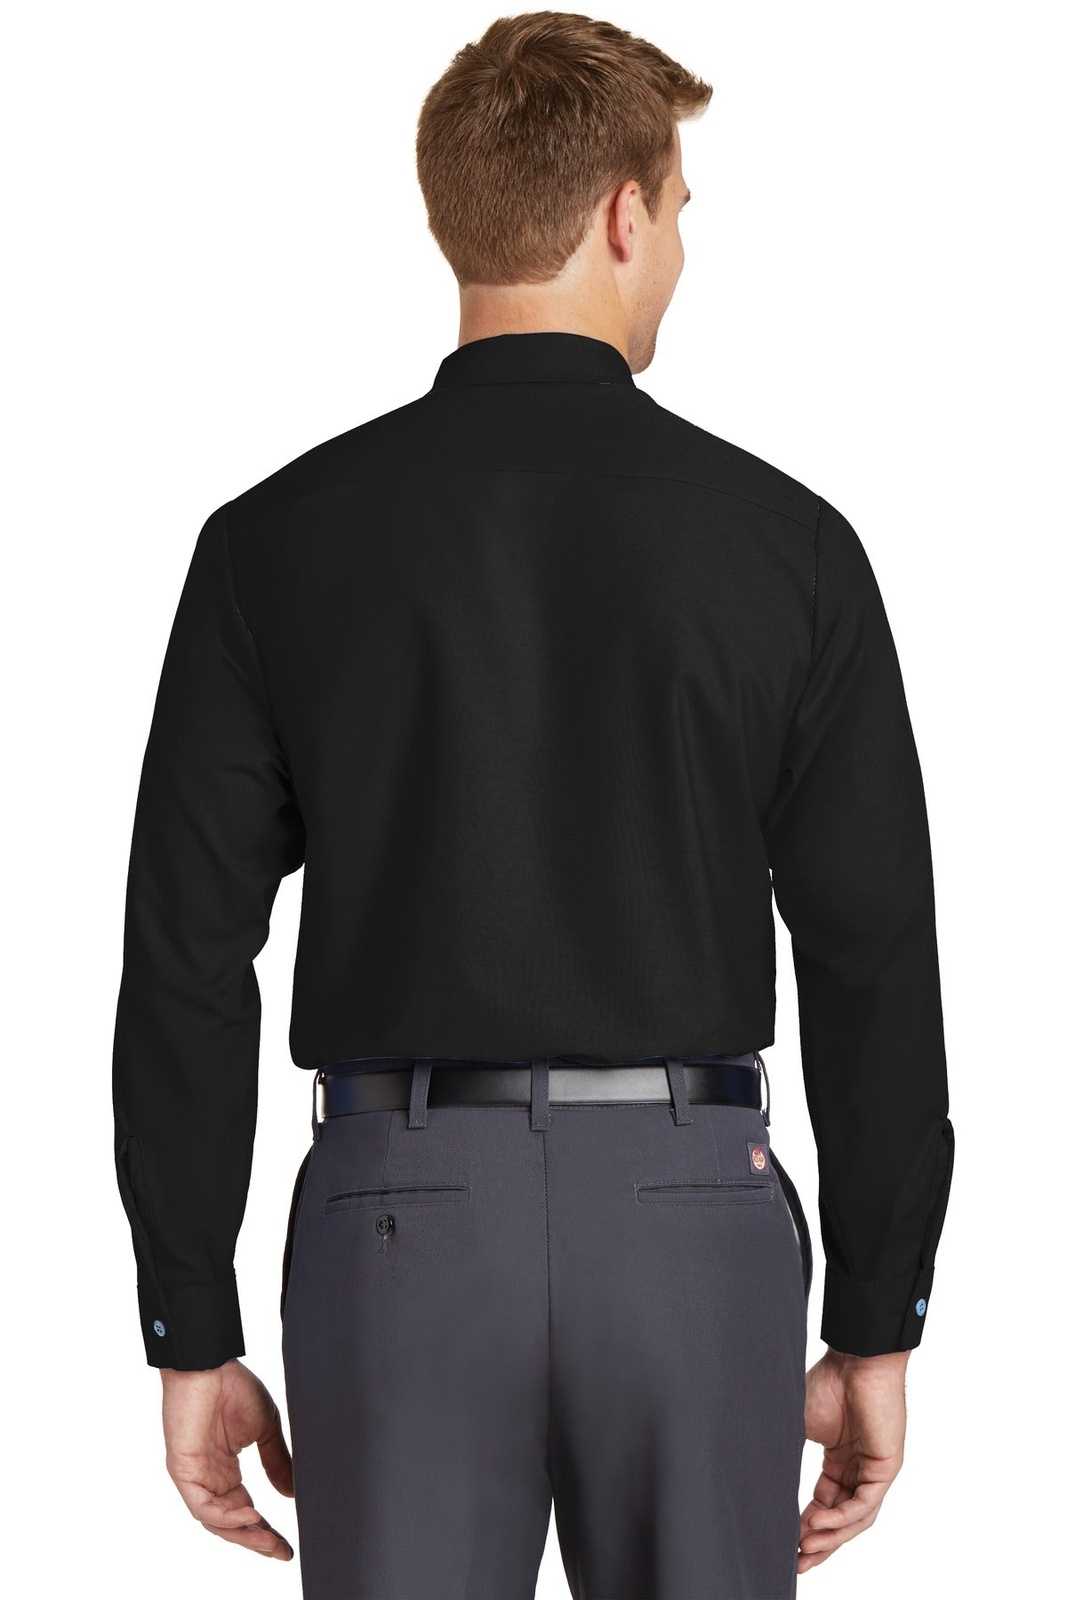 Red Kap SP14 Long Sleeve Industrial Work Shirt - Black - HIT a Double - 2